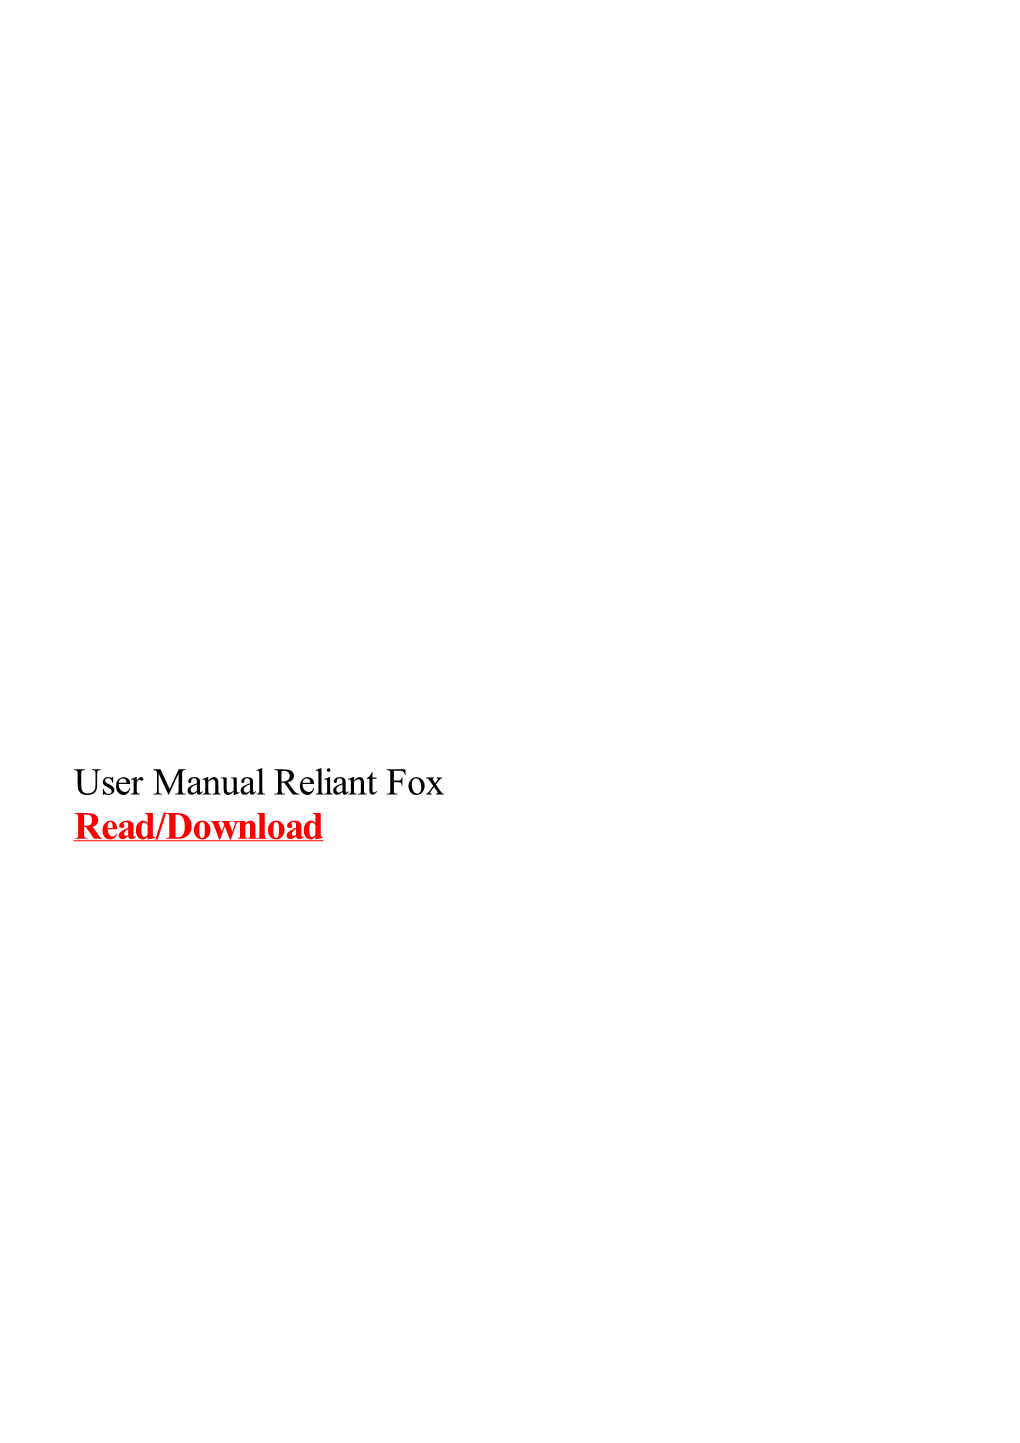 User Manual Reliant Fox